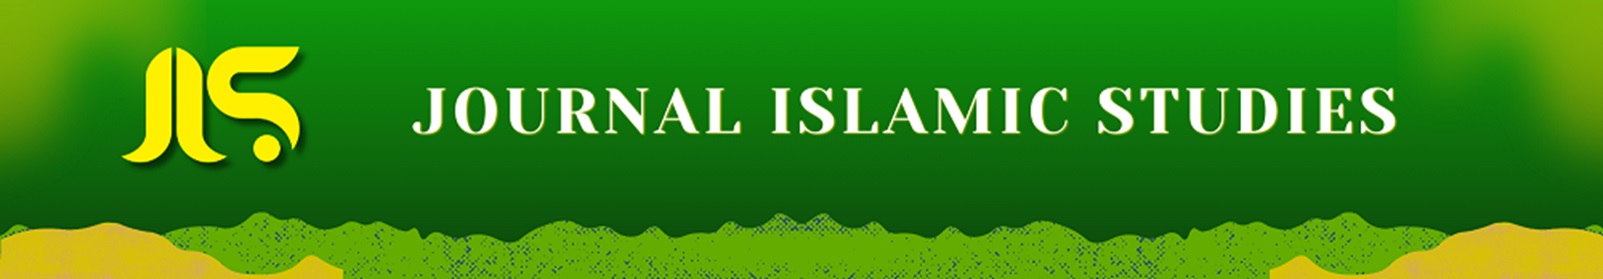 Journal Islamic Studies